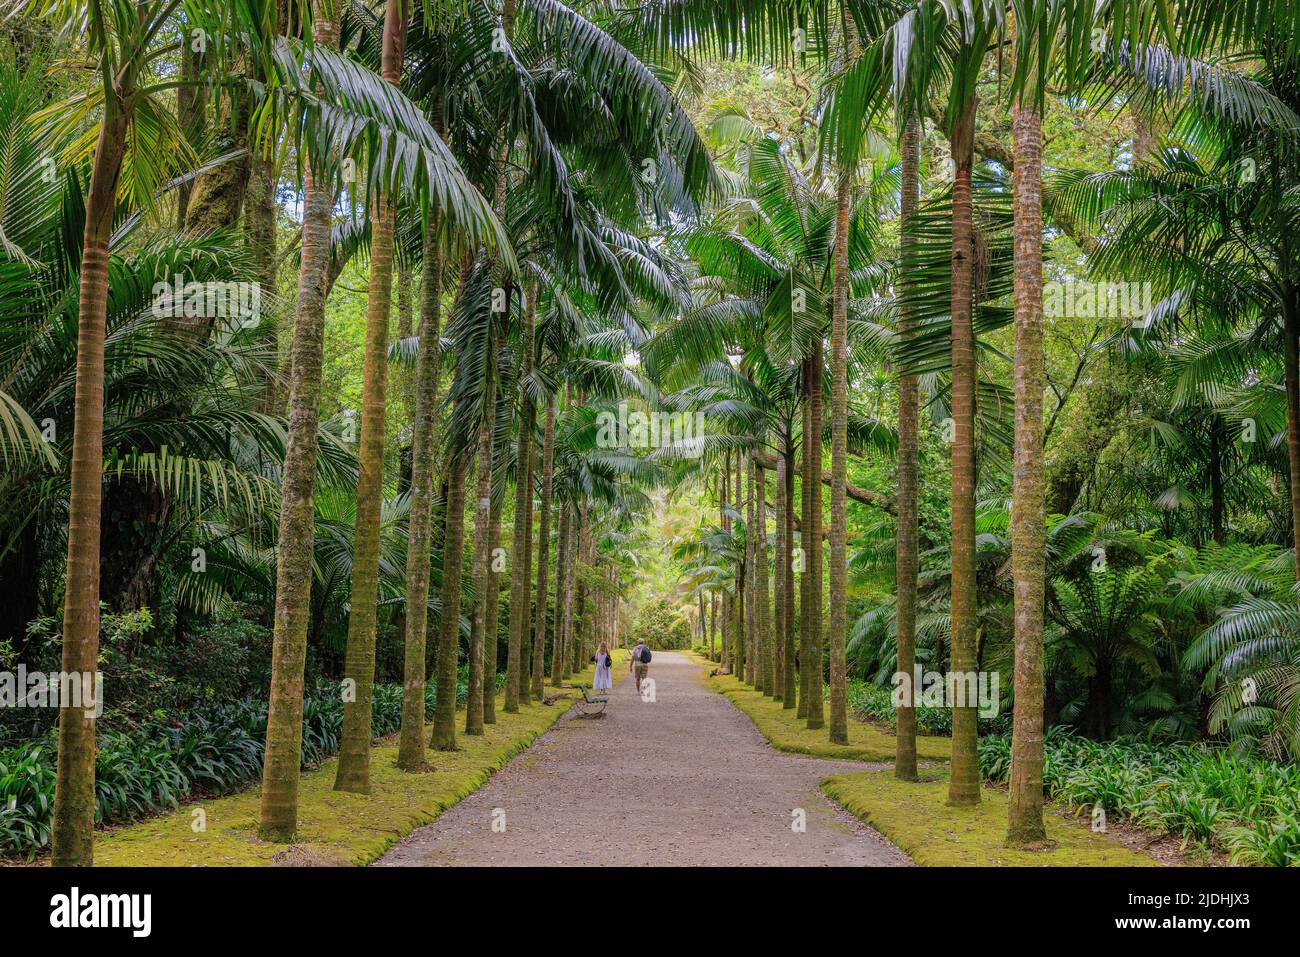 profitez d'une promenade tranquille le long d'une avenue bordée d'arbres dans les jardins de la terra nostra de furnas sao miguel açores Banque D'Images